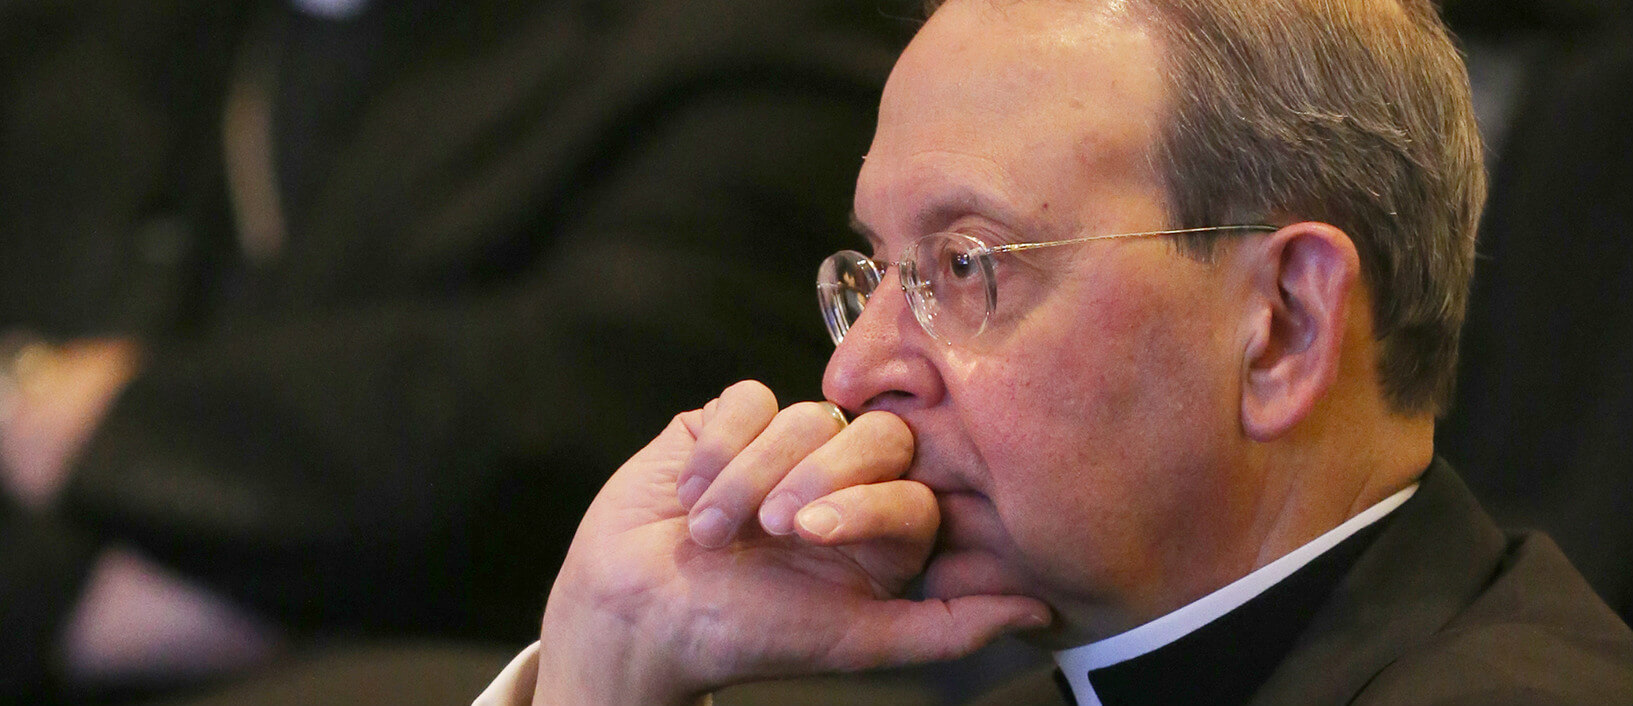 Archbishop Lori says his heart ‘broken’ by tragedy of synagogue shooting